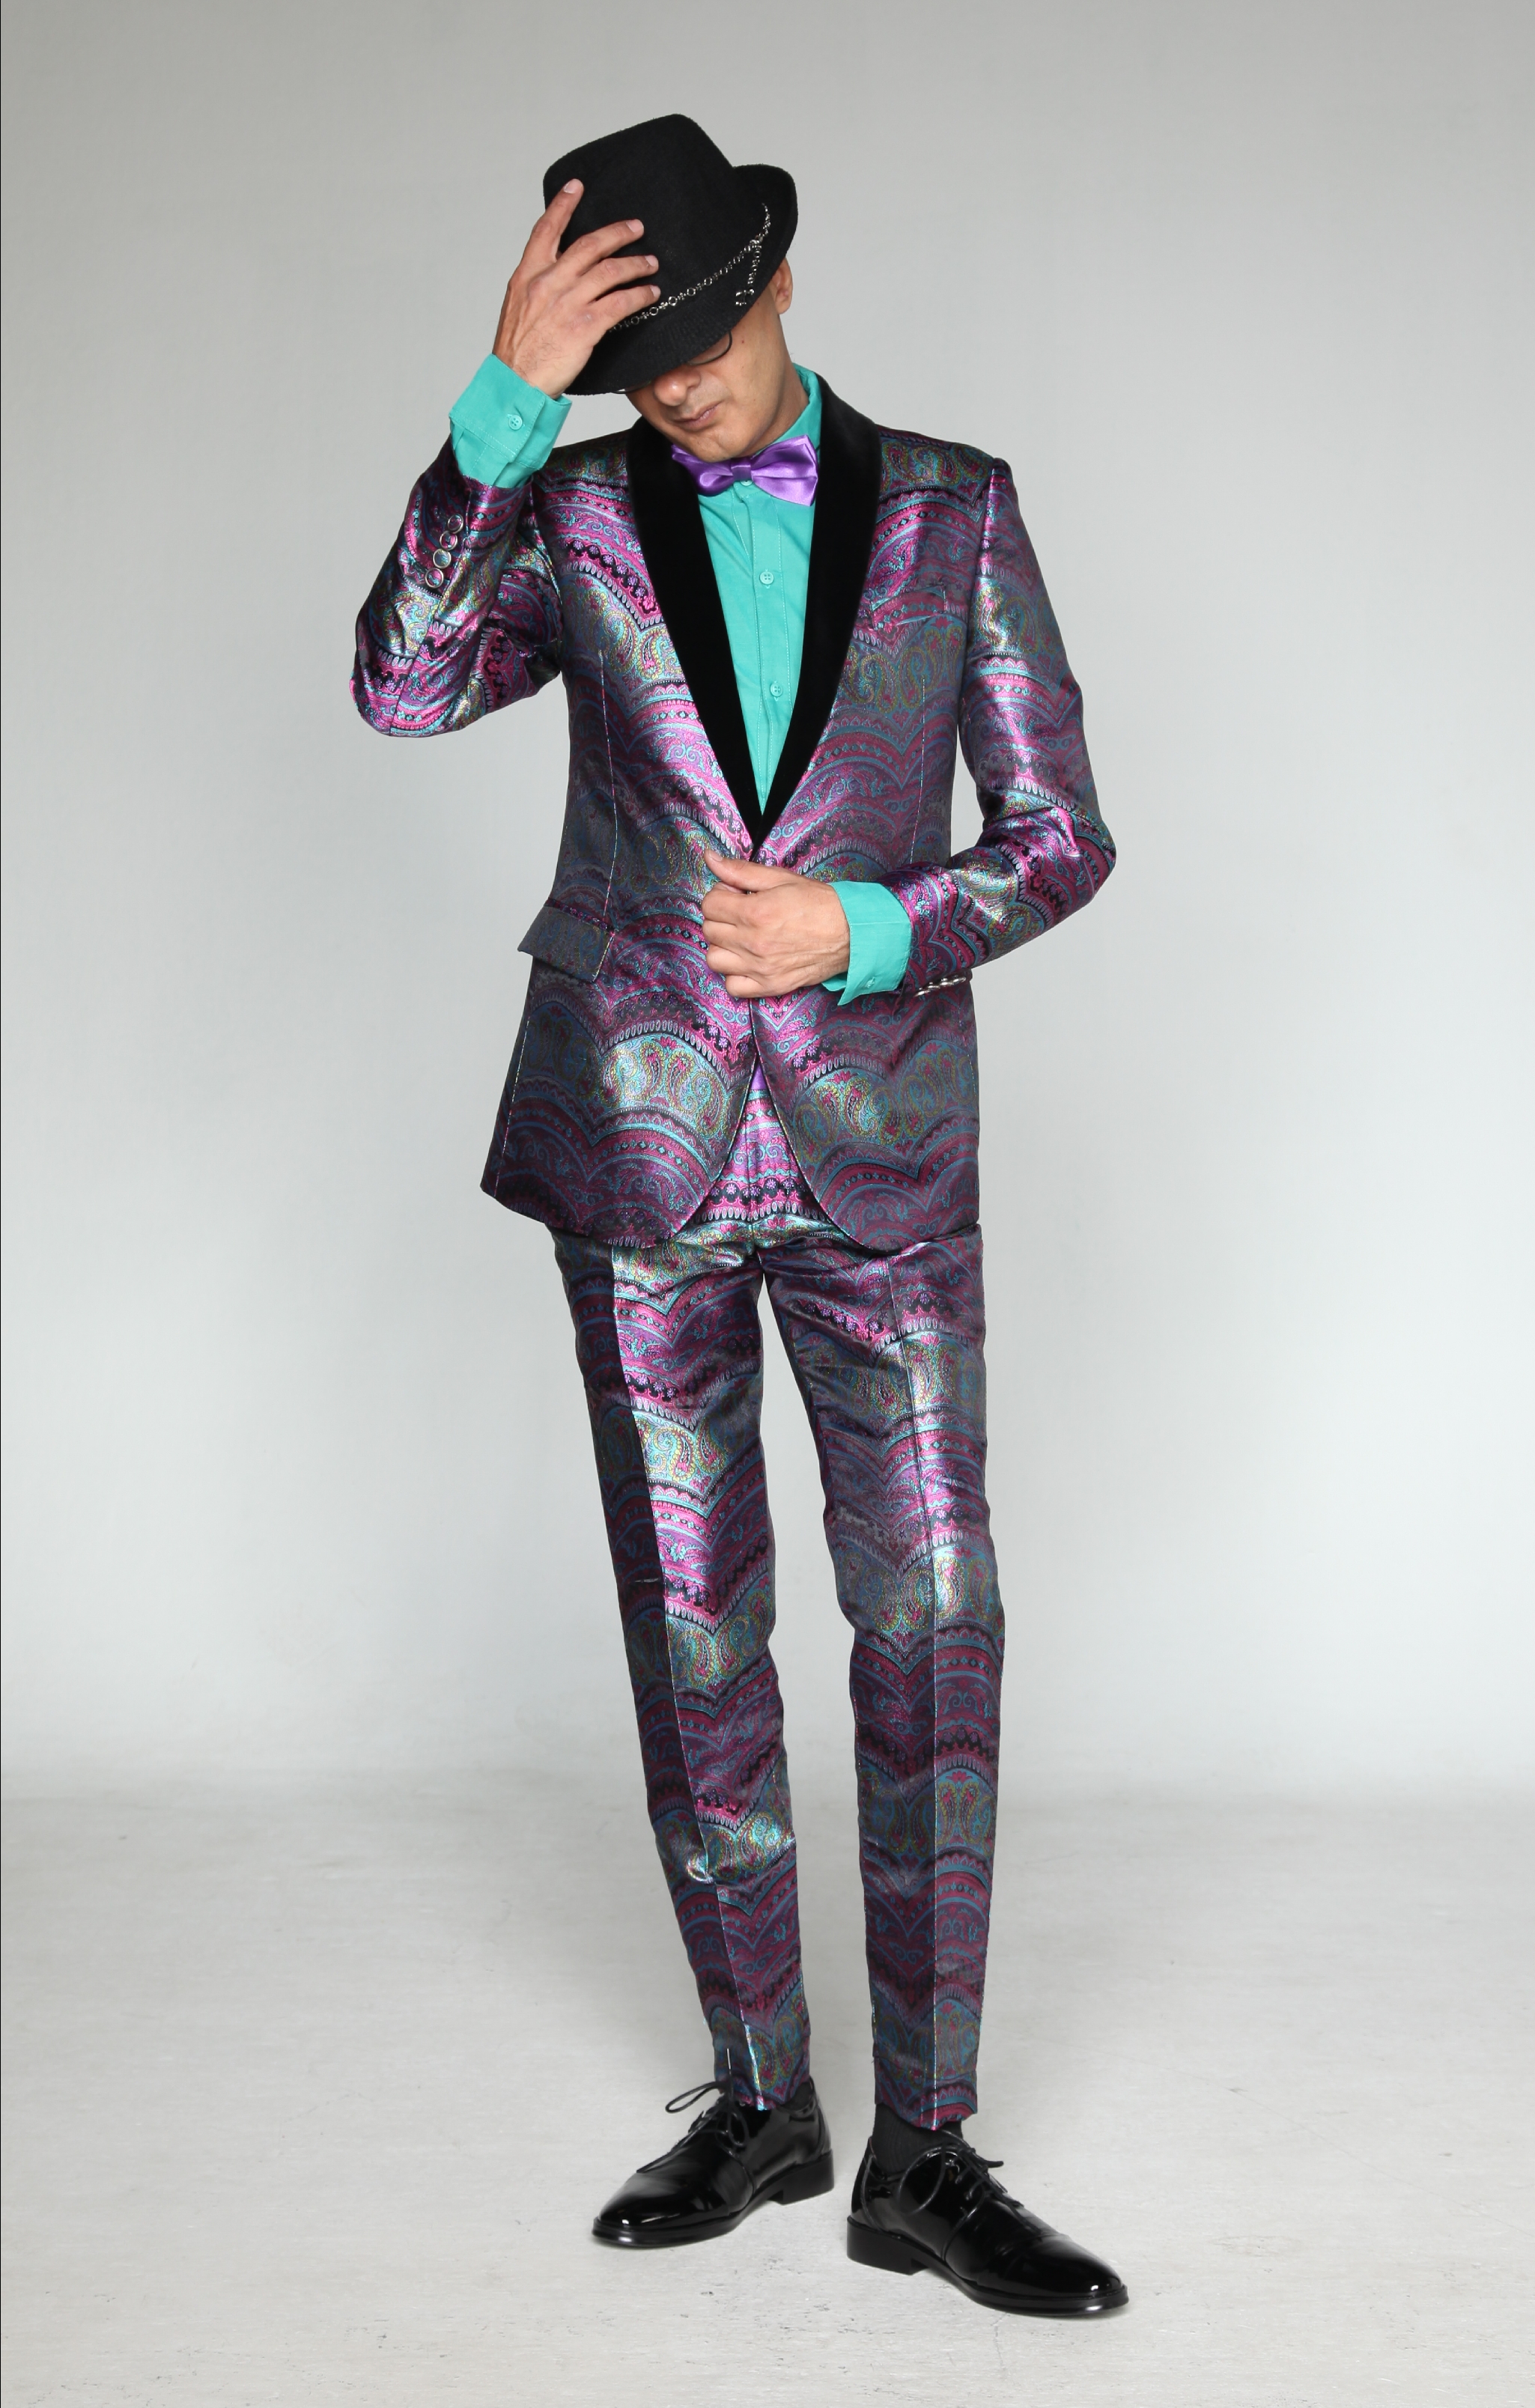 suit-rental-suits-rent-hire-designer-my-singapore-tailor-tailors-rentals-shop-tuxedo-black-tie-wedding-formal-22